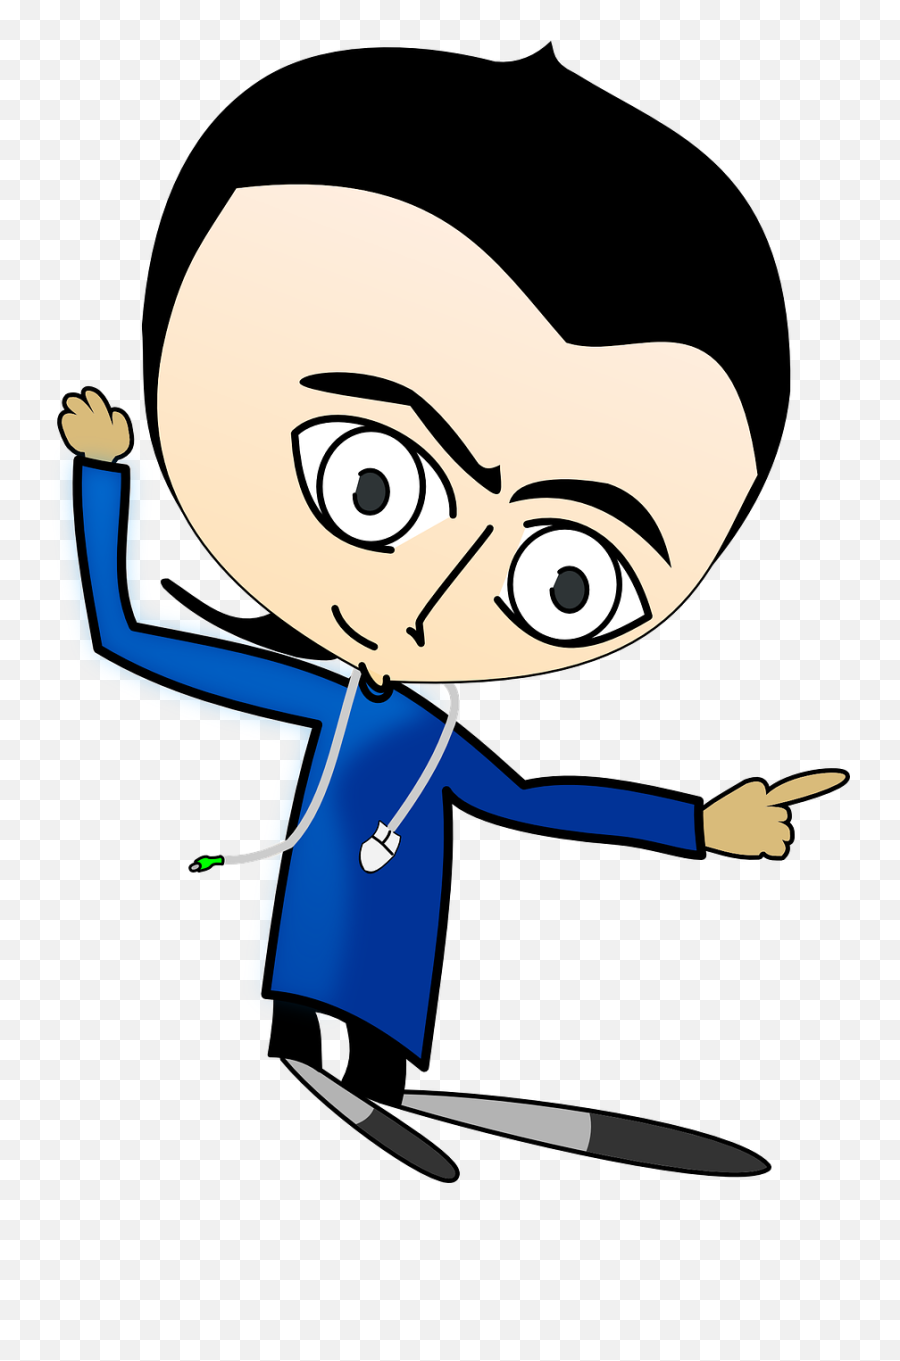 Nerd Geek Boy Man Public Domain Image - Freeimg Nerd Emoji,Free Adult Animated Emoticons